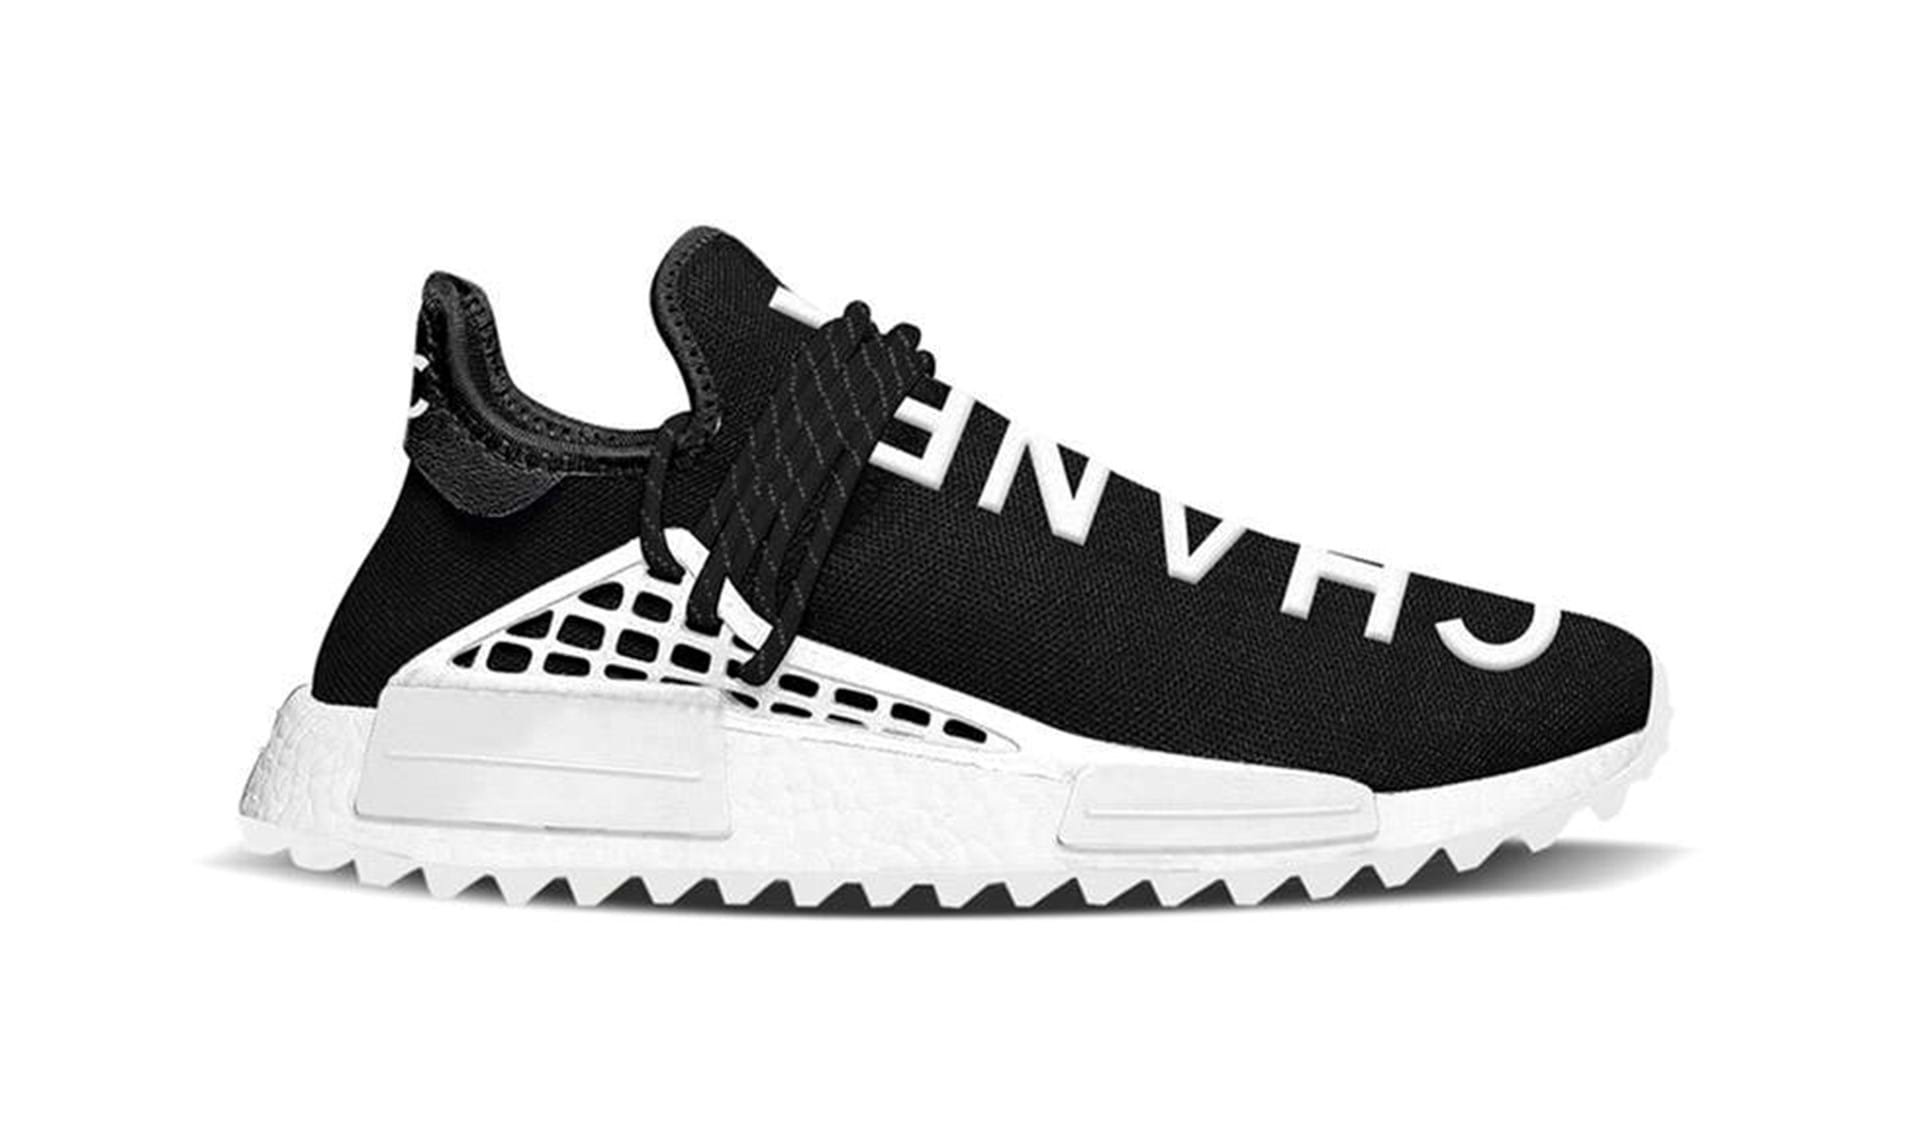 Designlæk: Se det nye sneaker-samarbejde Pharrell Williams, Chanel og Adidas - Euroman